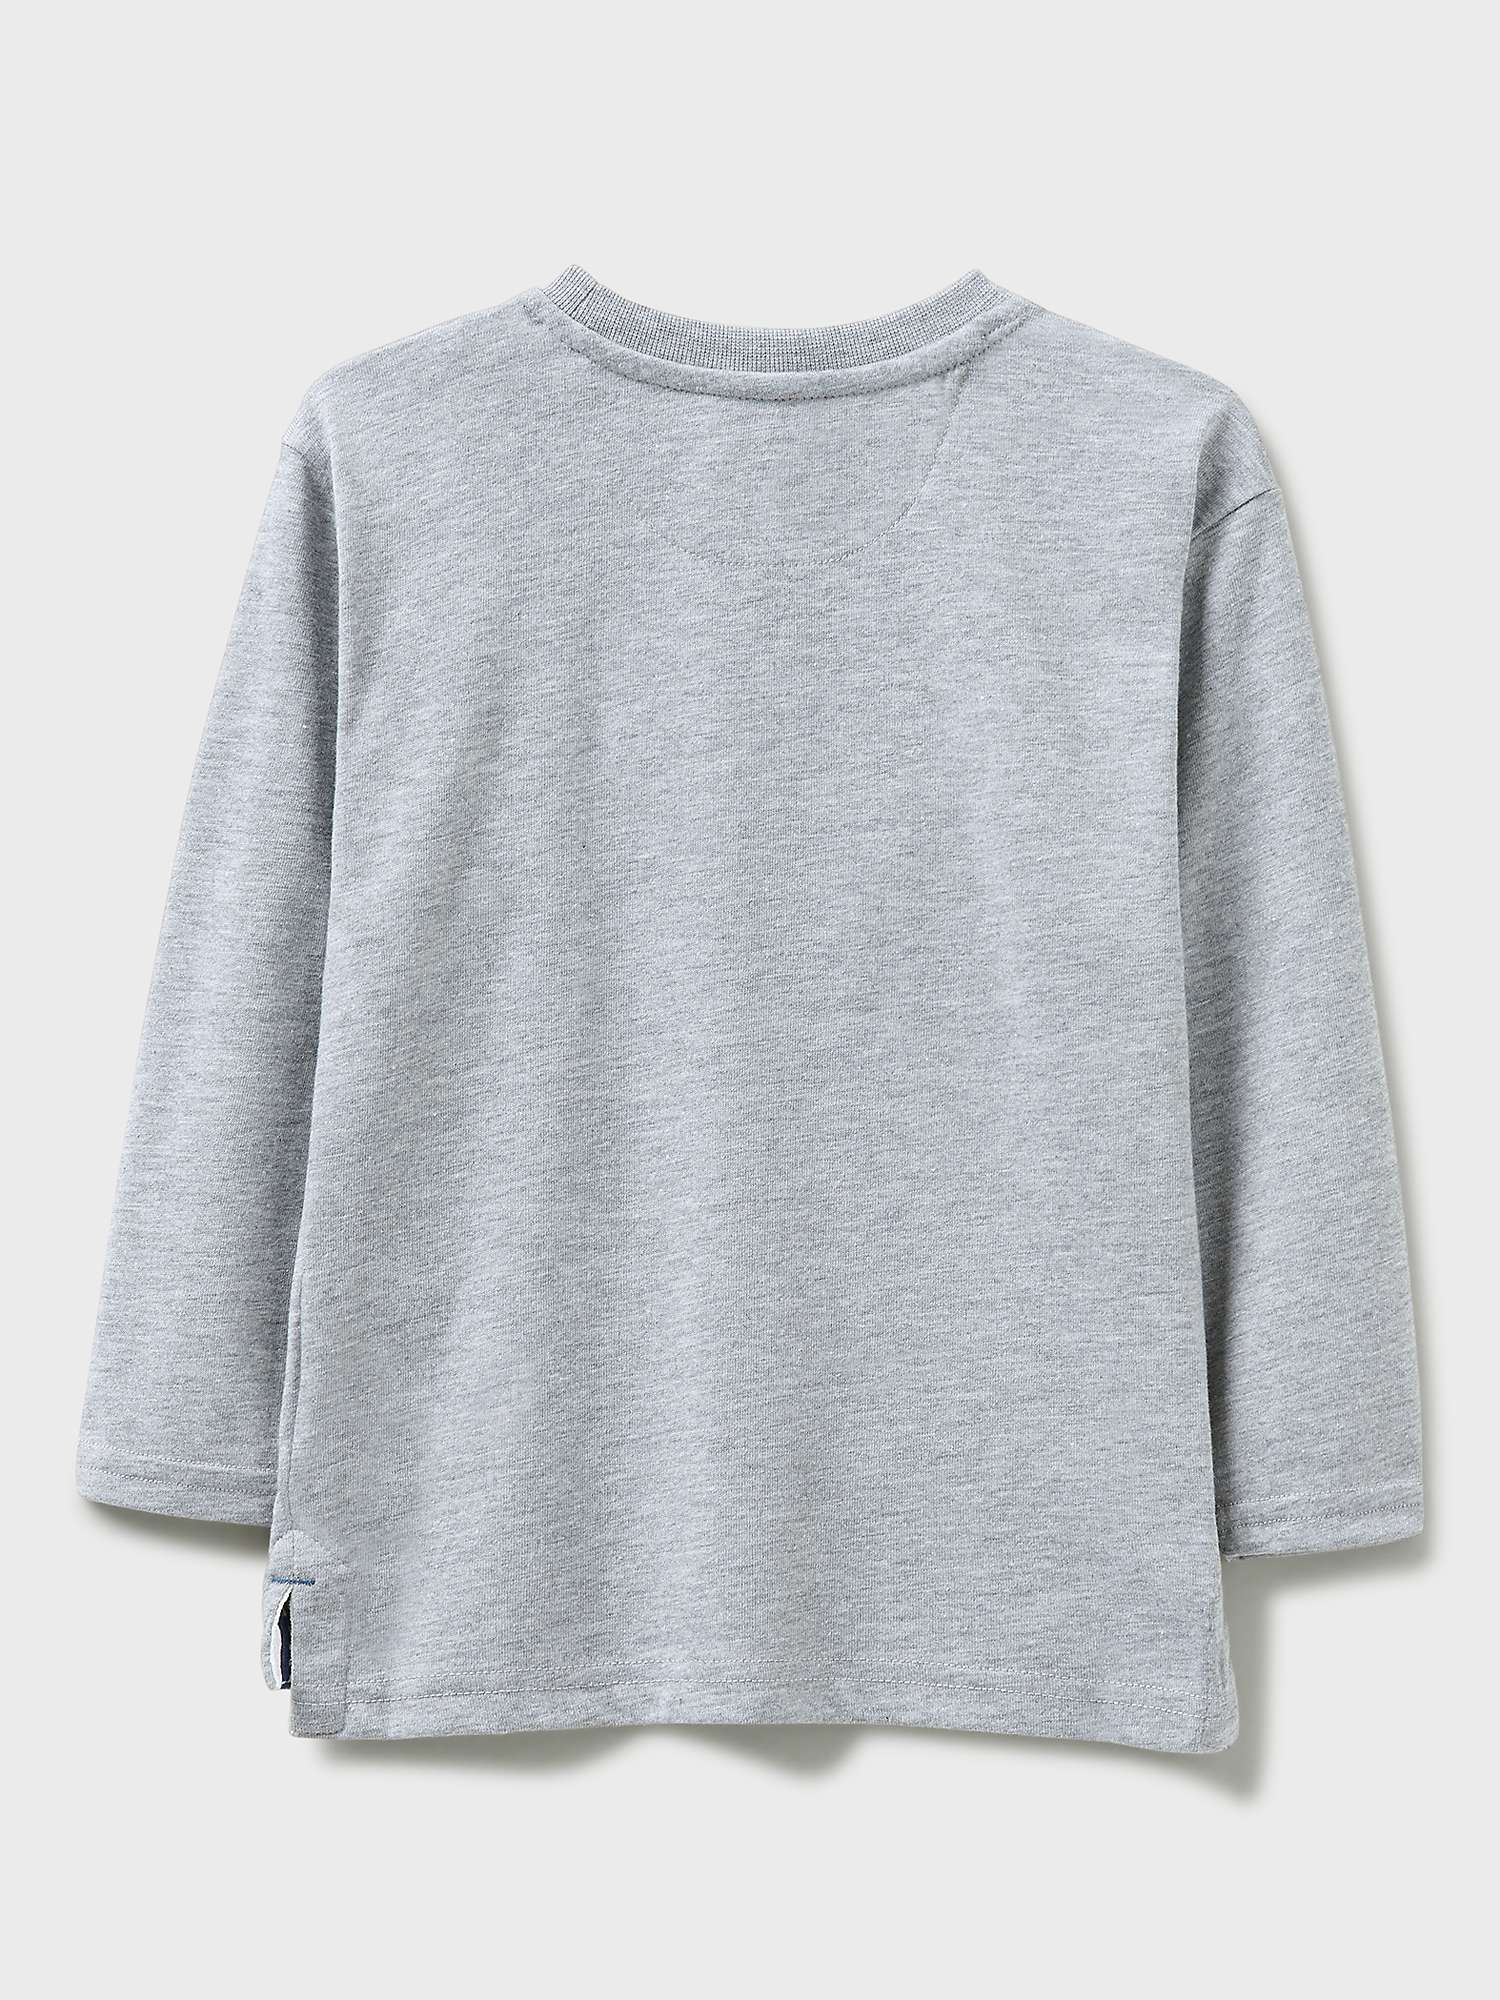 Buy Crew Clothing Kids' Oversized Applique Long Sleeve T-Shirt, Light Grey Online at johnlewis.com